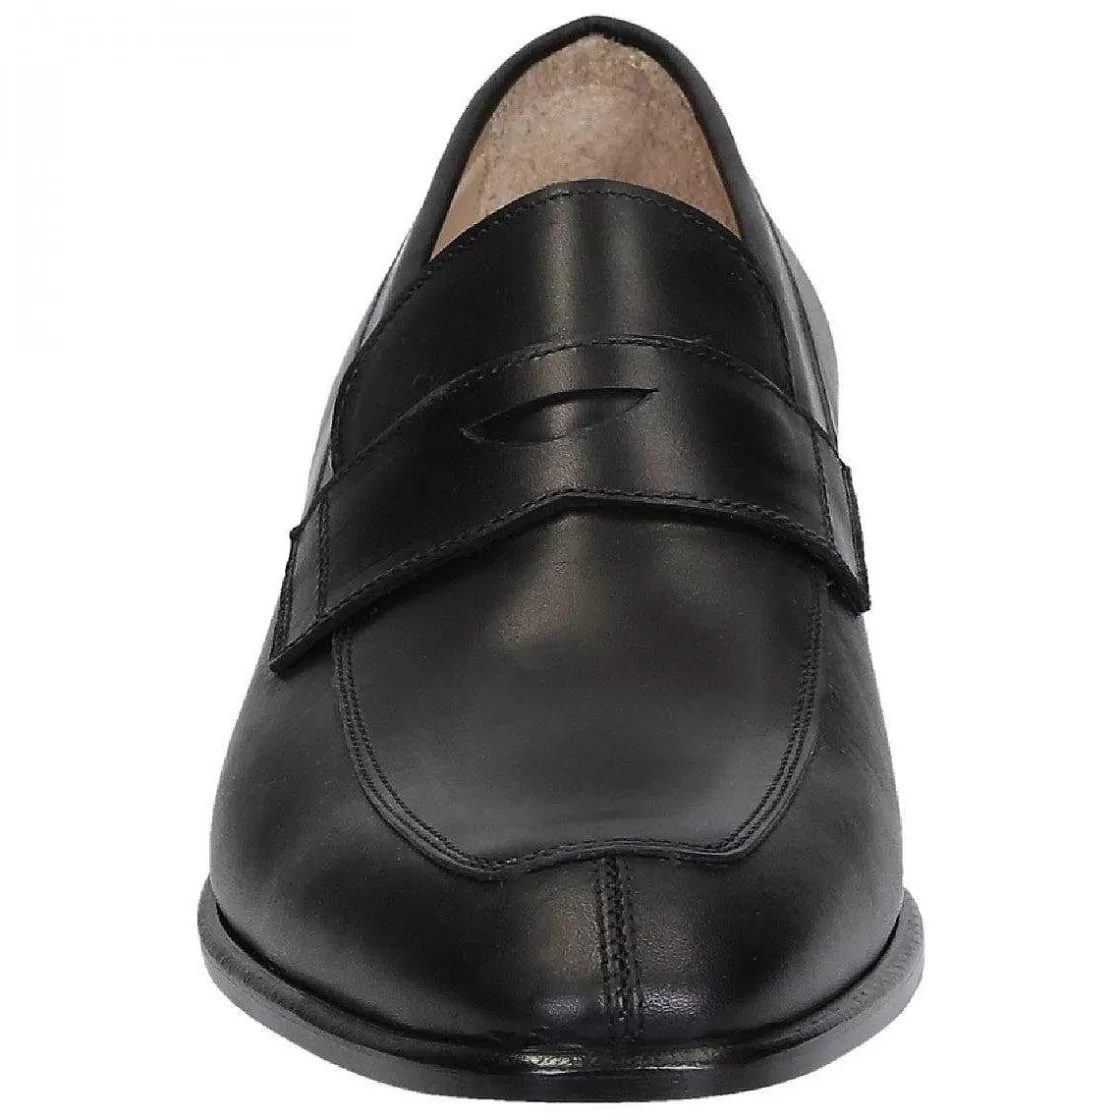 Leonardo Men'S College Loafers In Black Leather Calfskin Sale